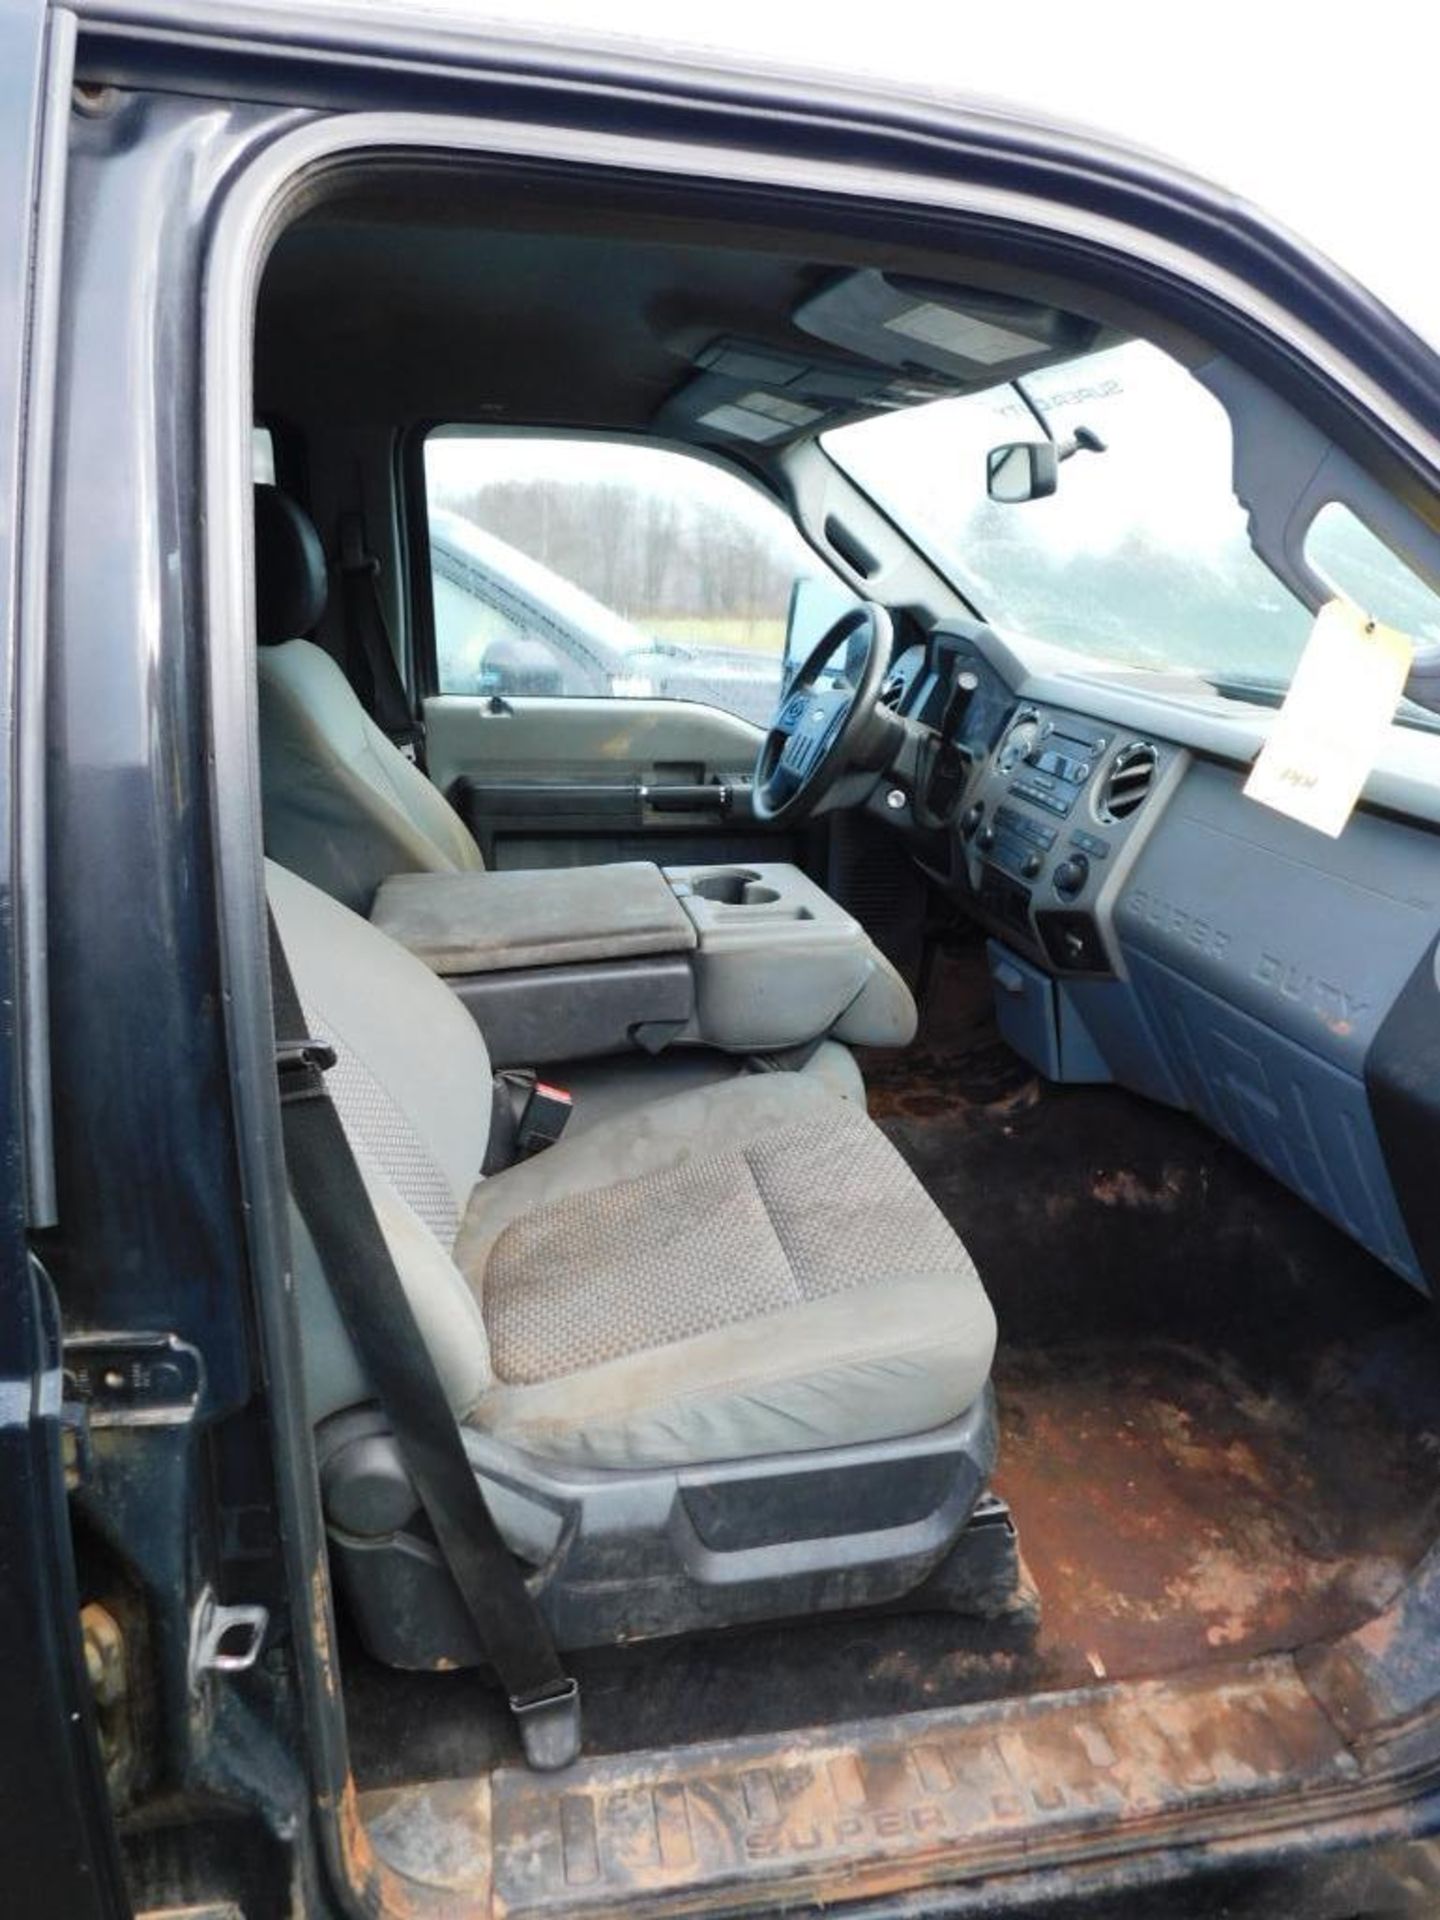 2015 Ford F250 Super-Duty XLT Crew Cab, 4-Wheel Drive, 6.2 Liter V8 Gasoline Motor, Auto, 6'6" Bed w - Image 9 of 11